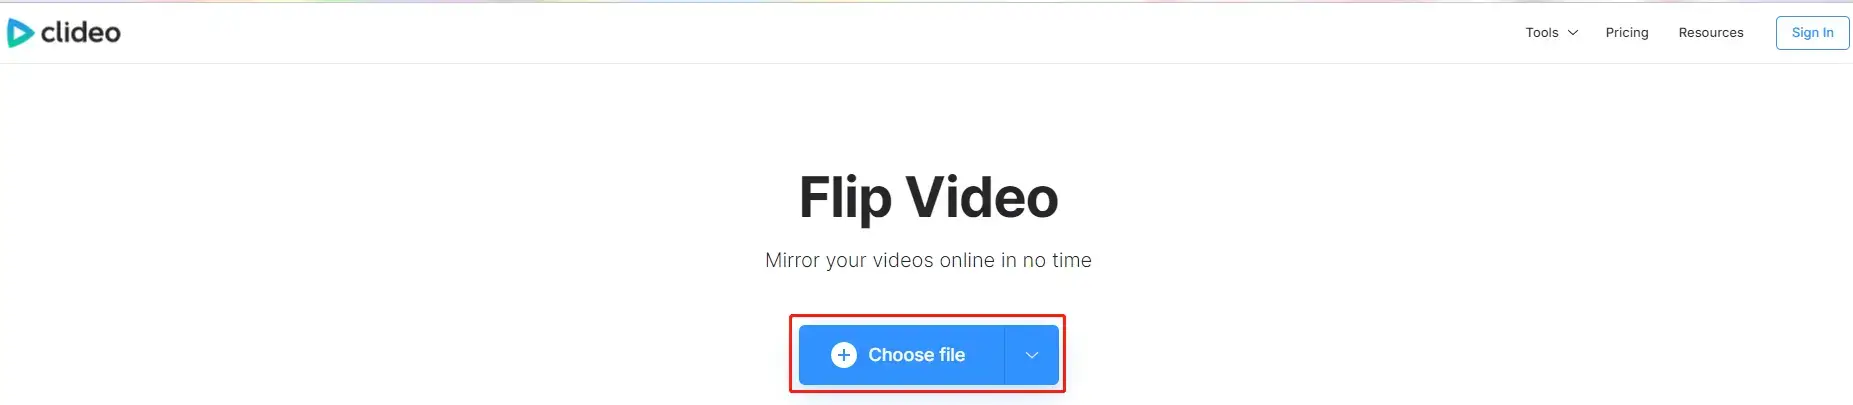 click choose file in clideo